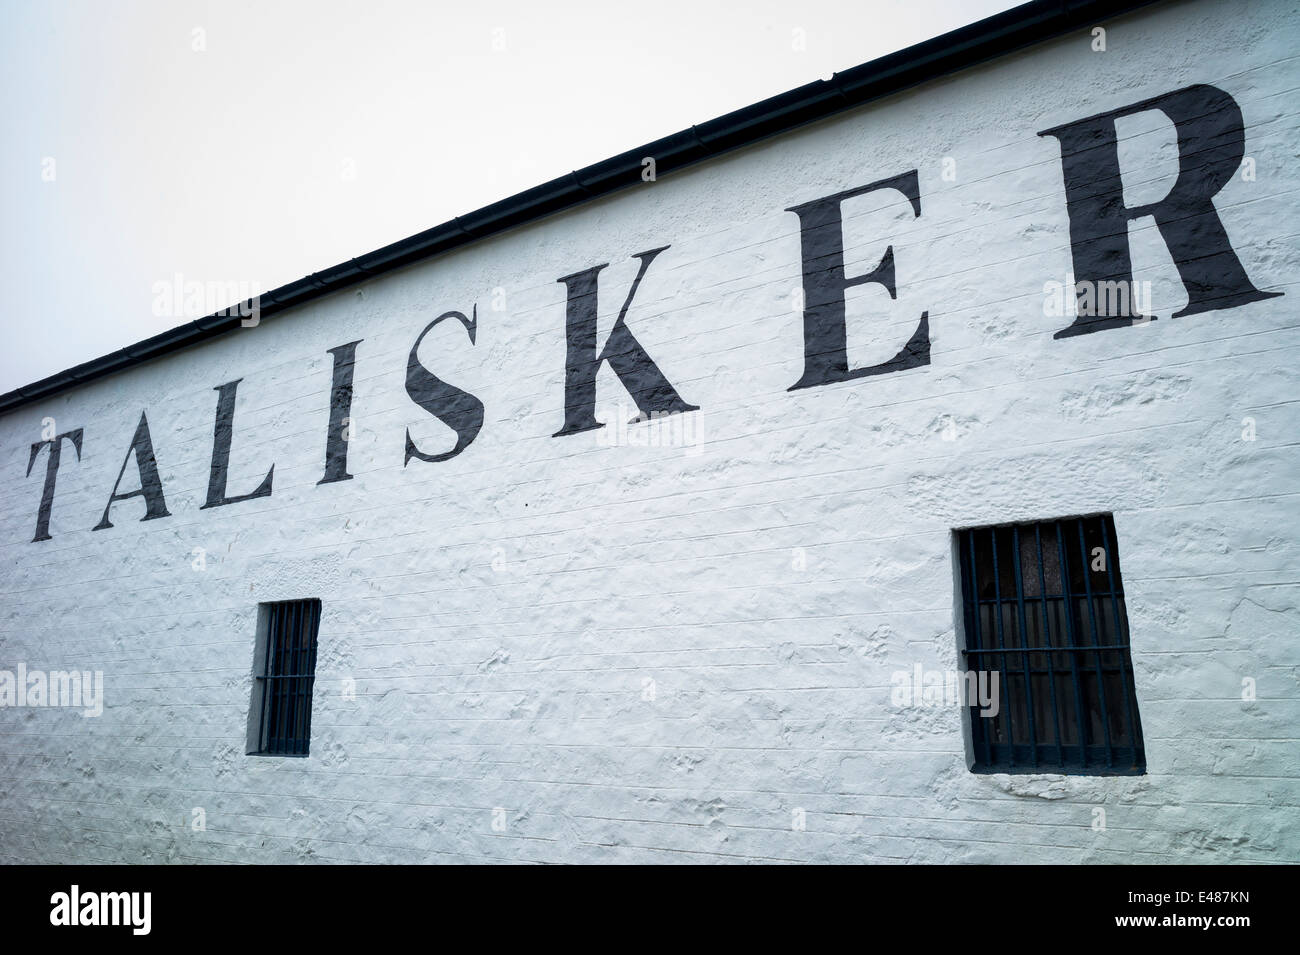 Talisker Single Malt Whisky Distillery in Carbost on Isle of Skye, SCOTLAND Stock Photo